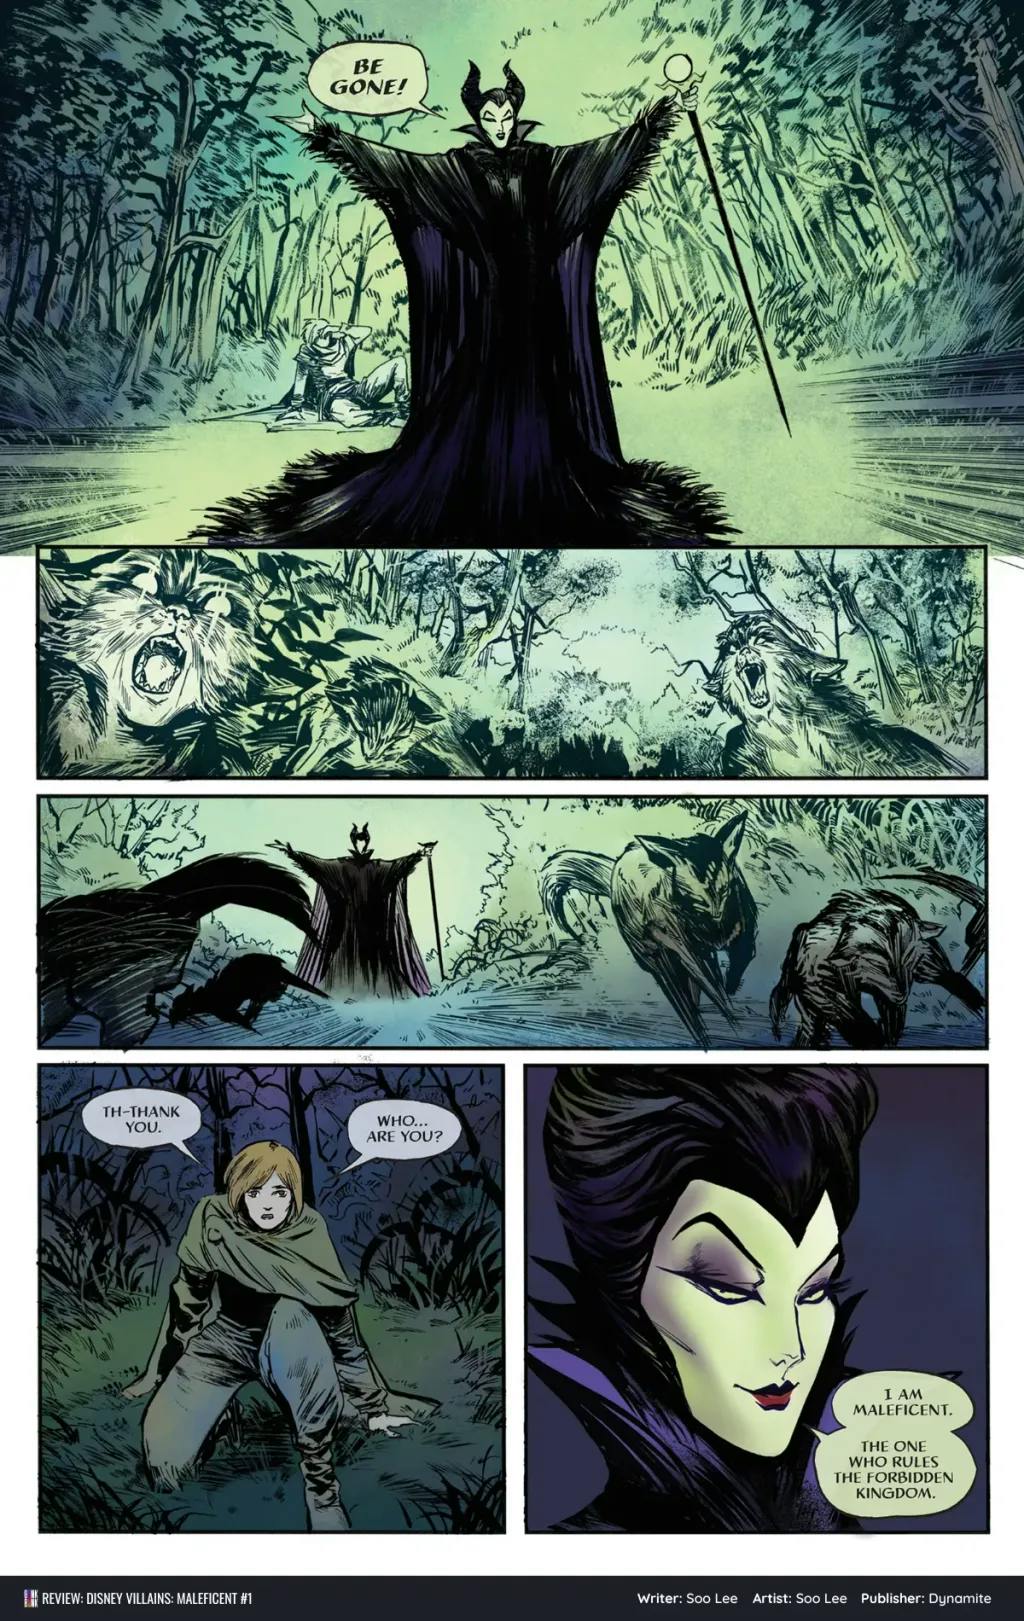 Maleficent shows herself